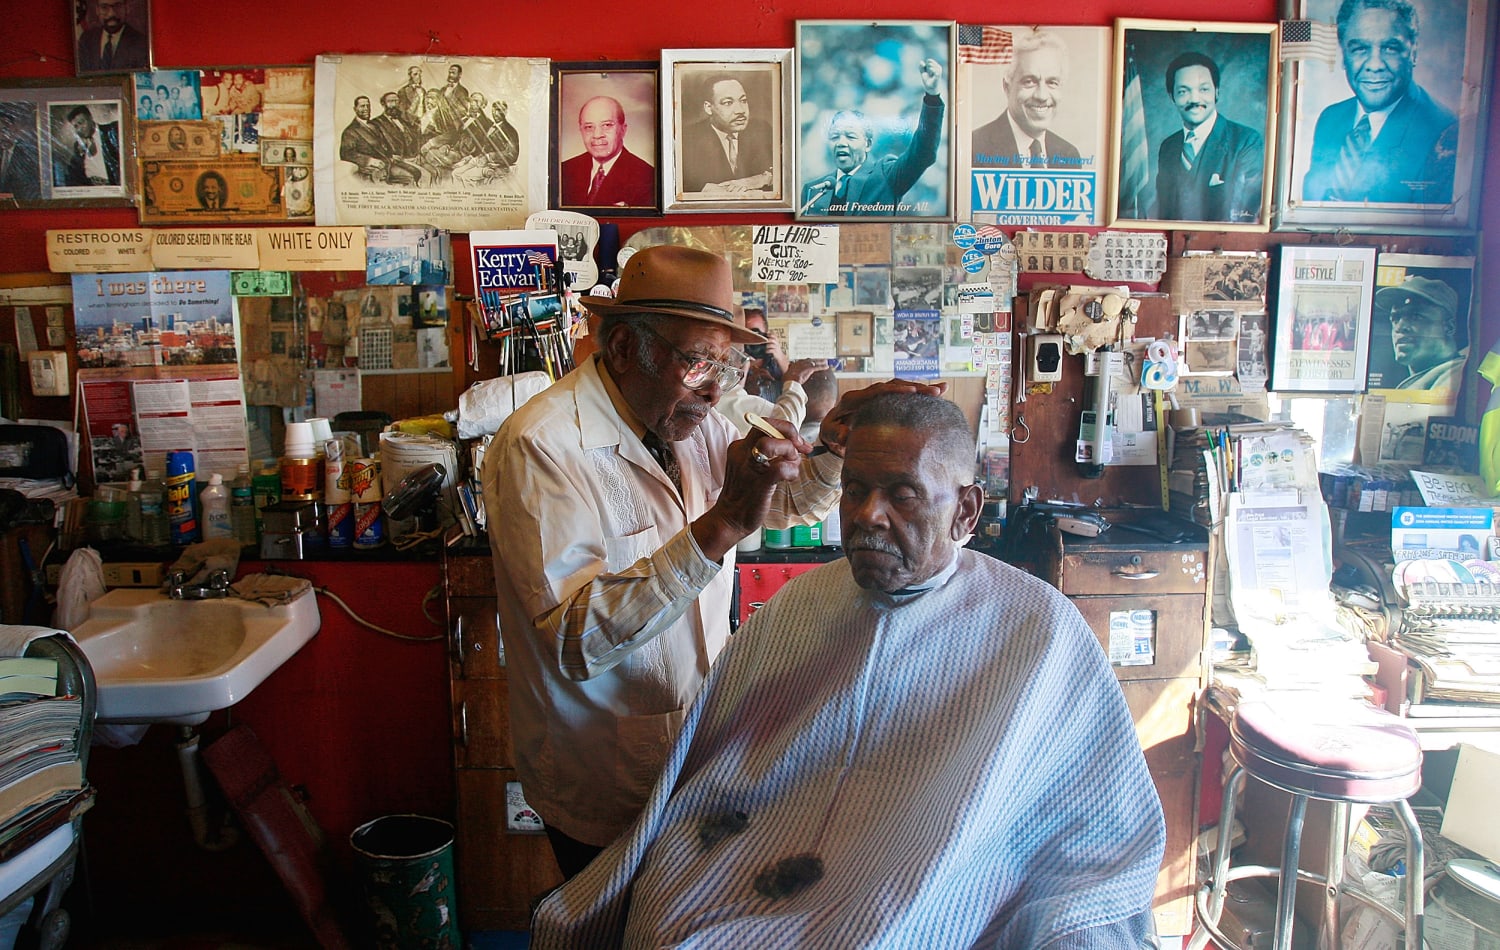 TOP 10 BEST African American Barber Shop near Alameda, CA